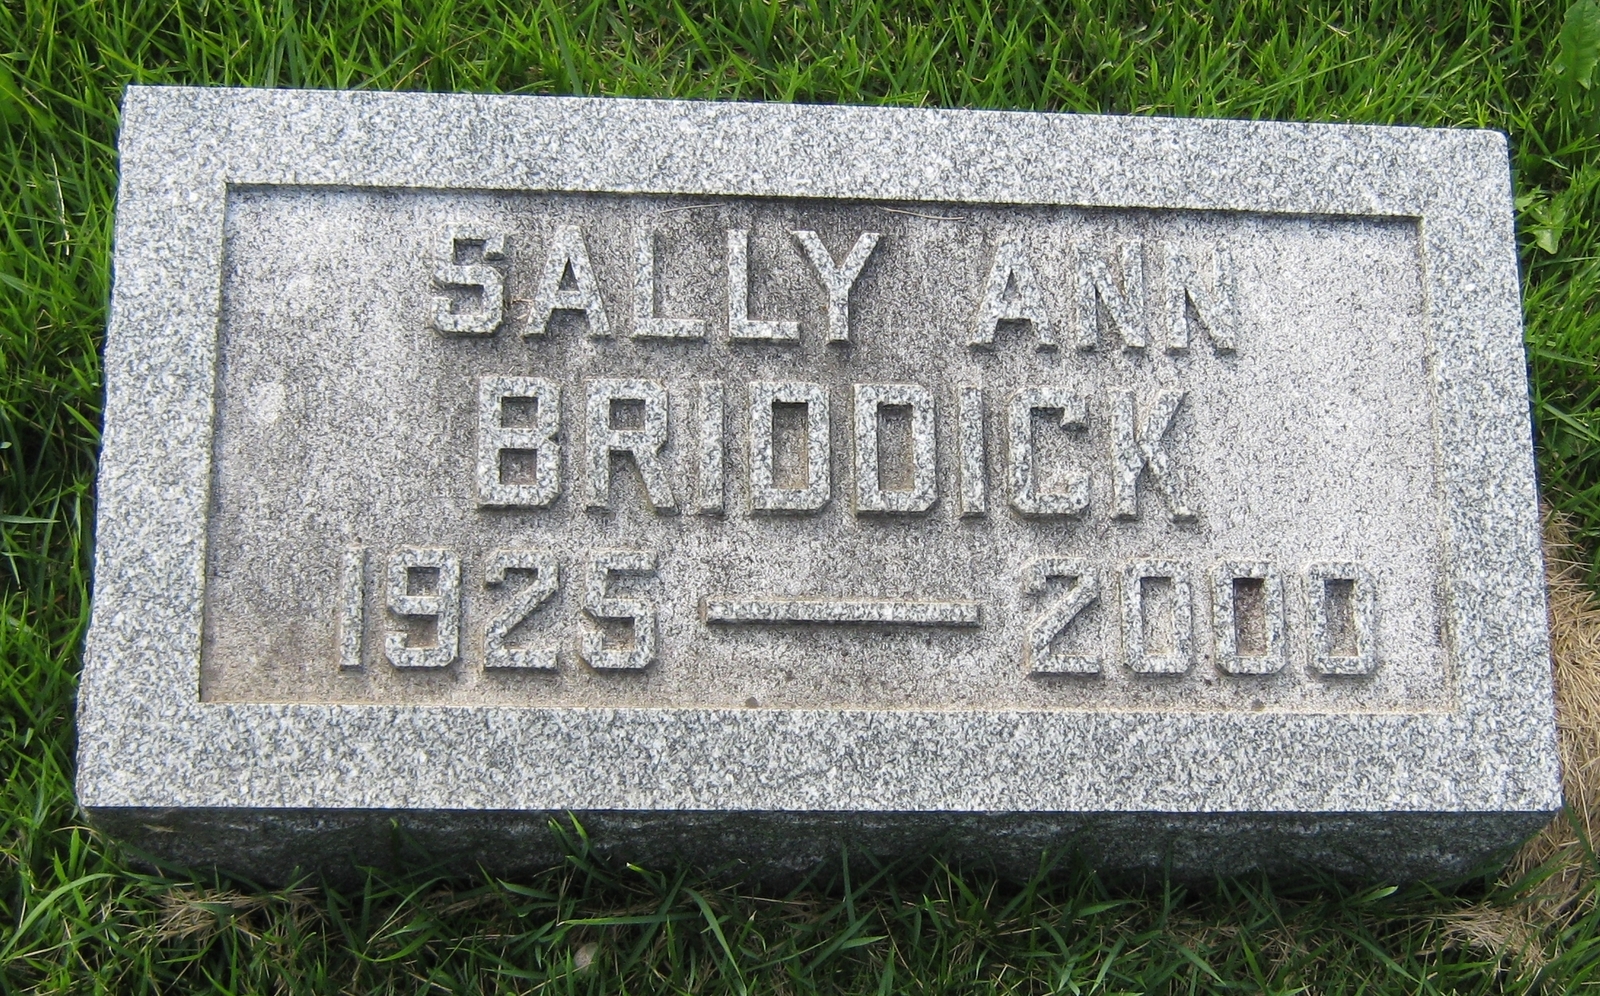 Sally Ann Briddick